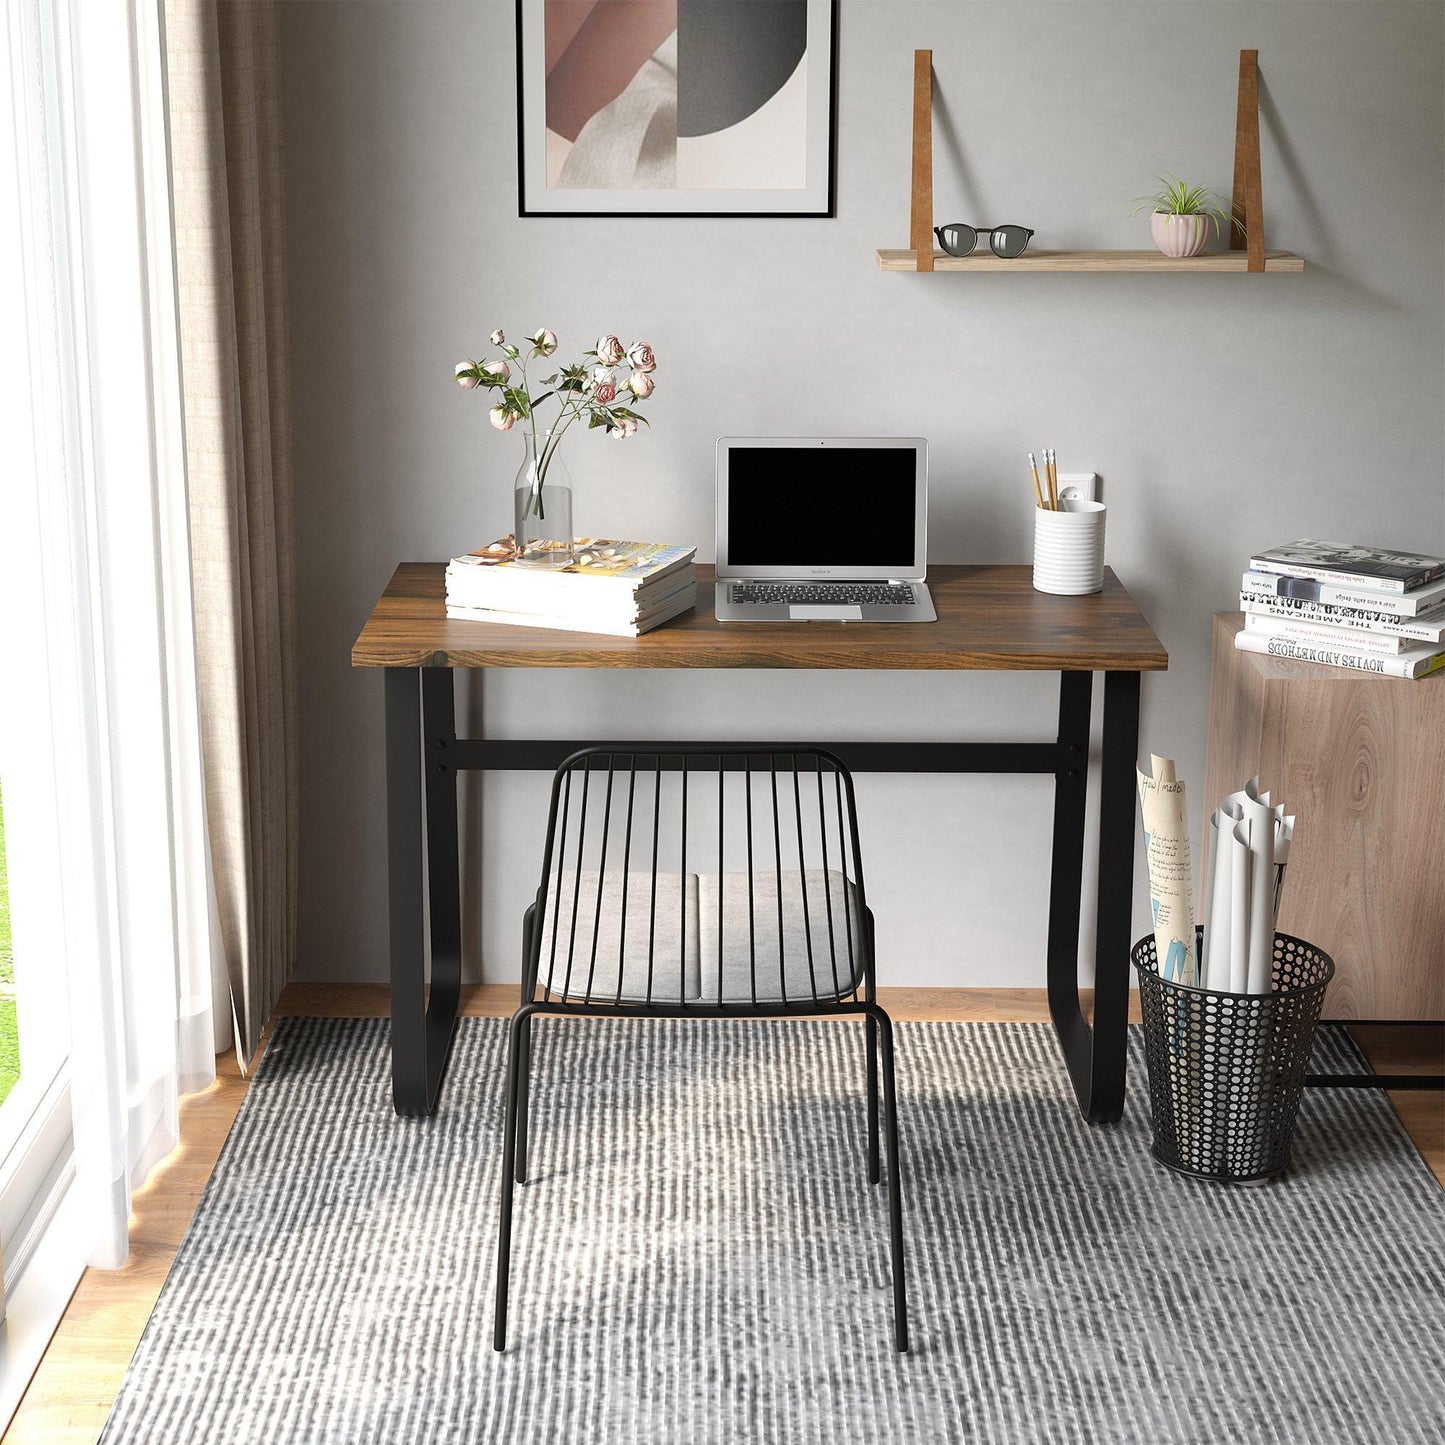 HOMCOM Industrial Writing Desk - Ideal for Home Office or Study - ALL4U RETAILER LTD